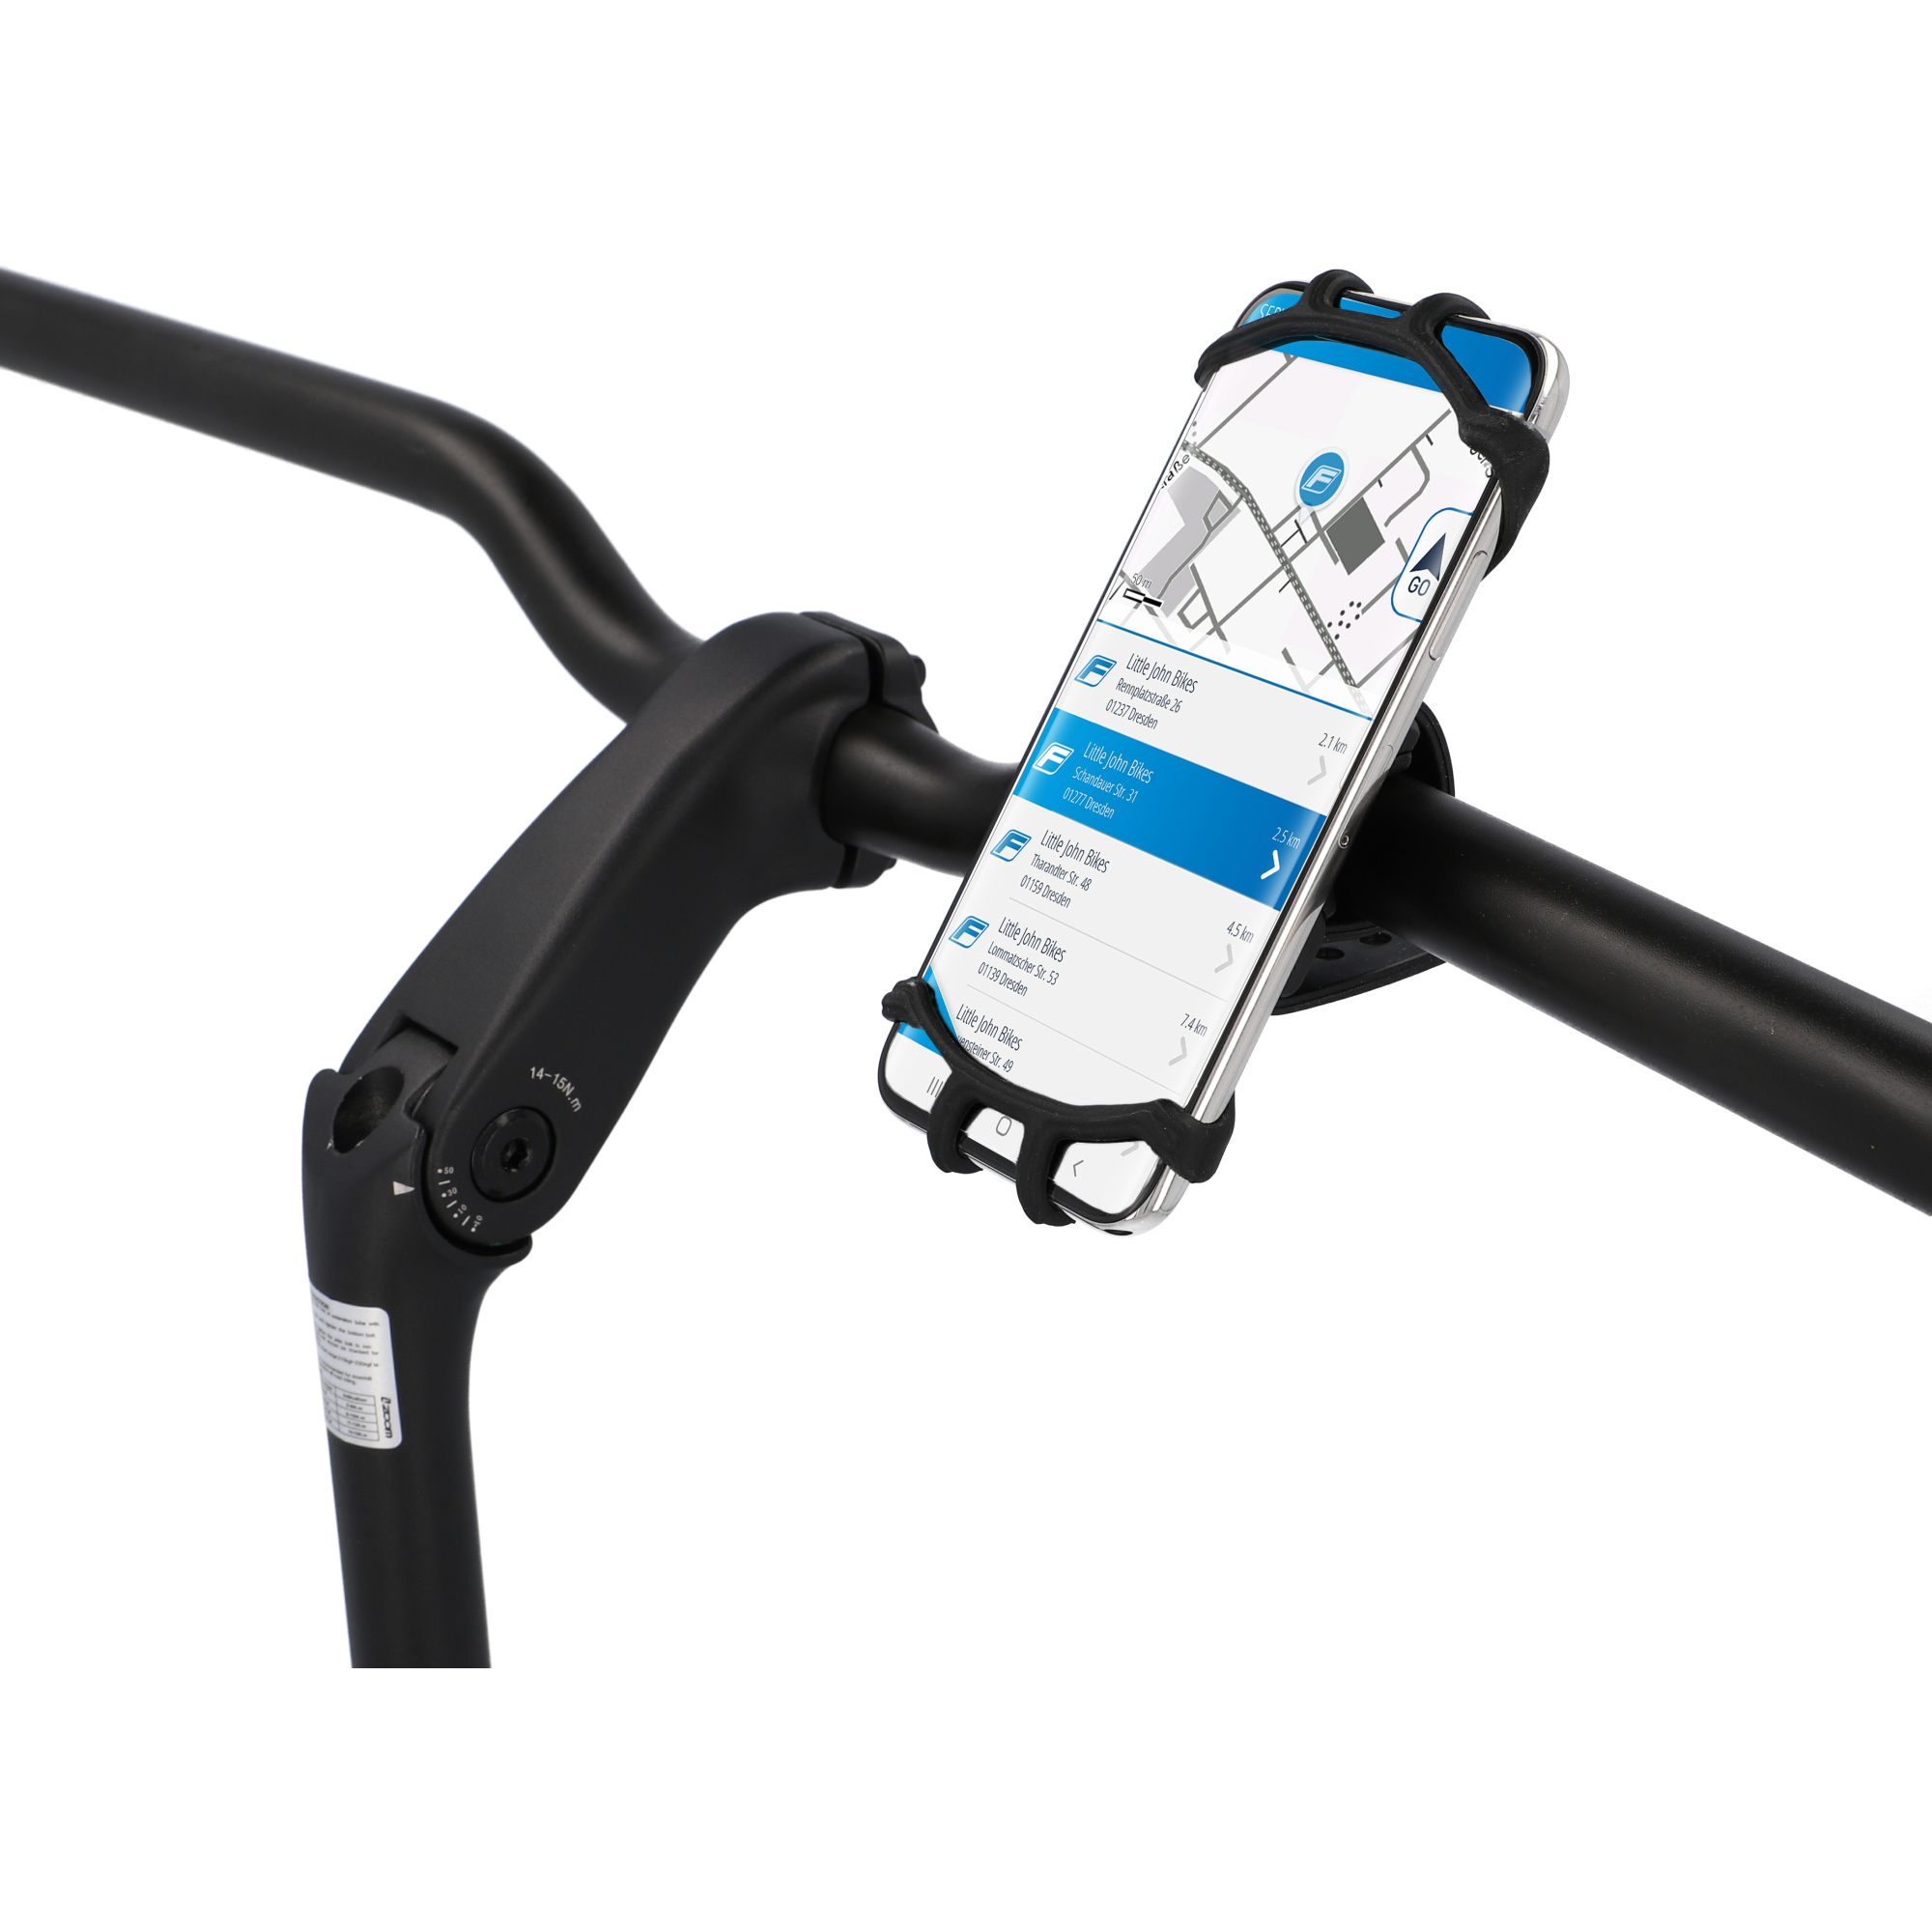 Fahrrad-Smartphonehalter Silikon schwarz 360° drehbar + product picture